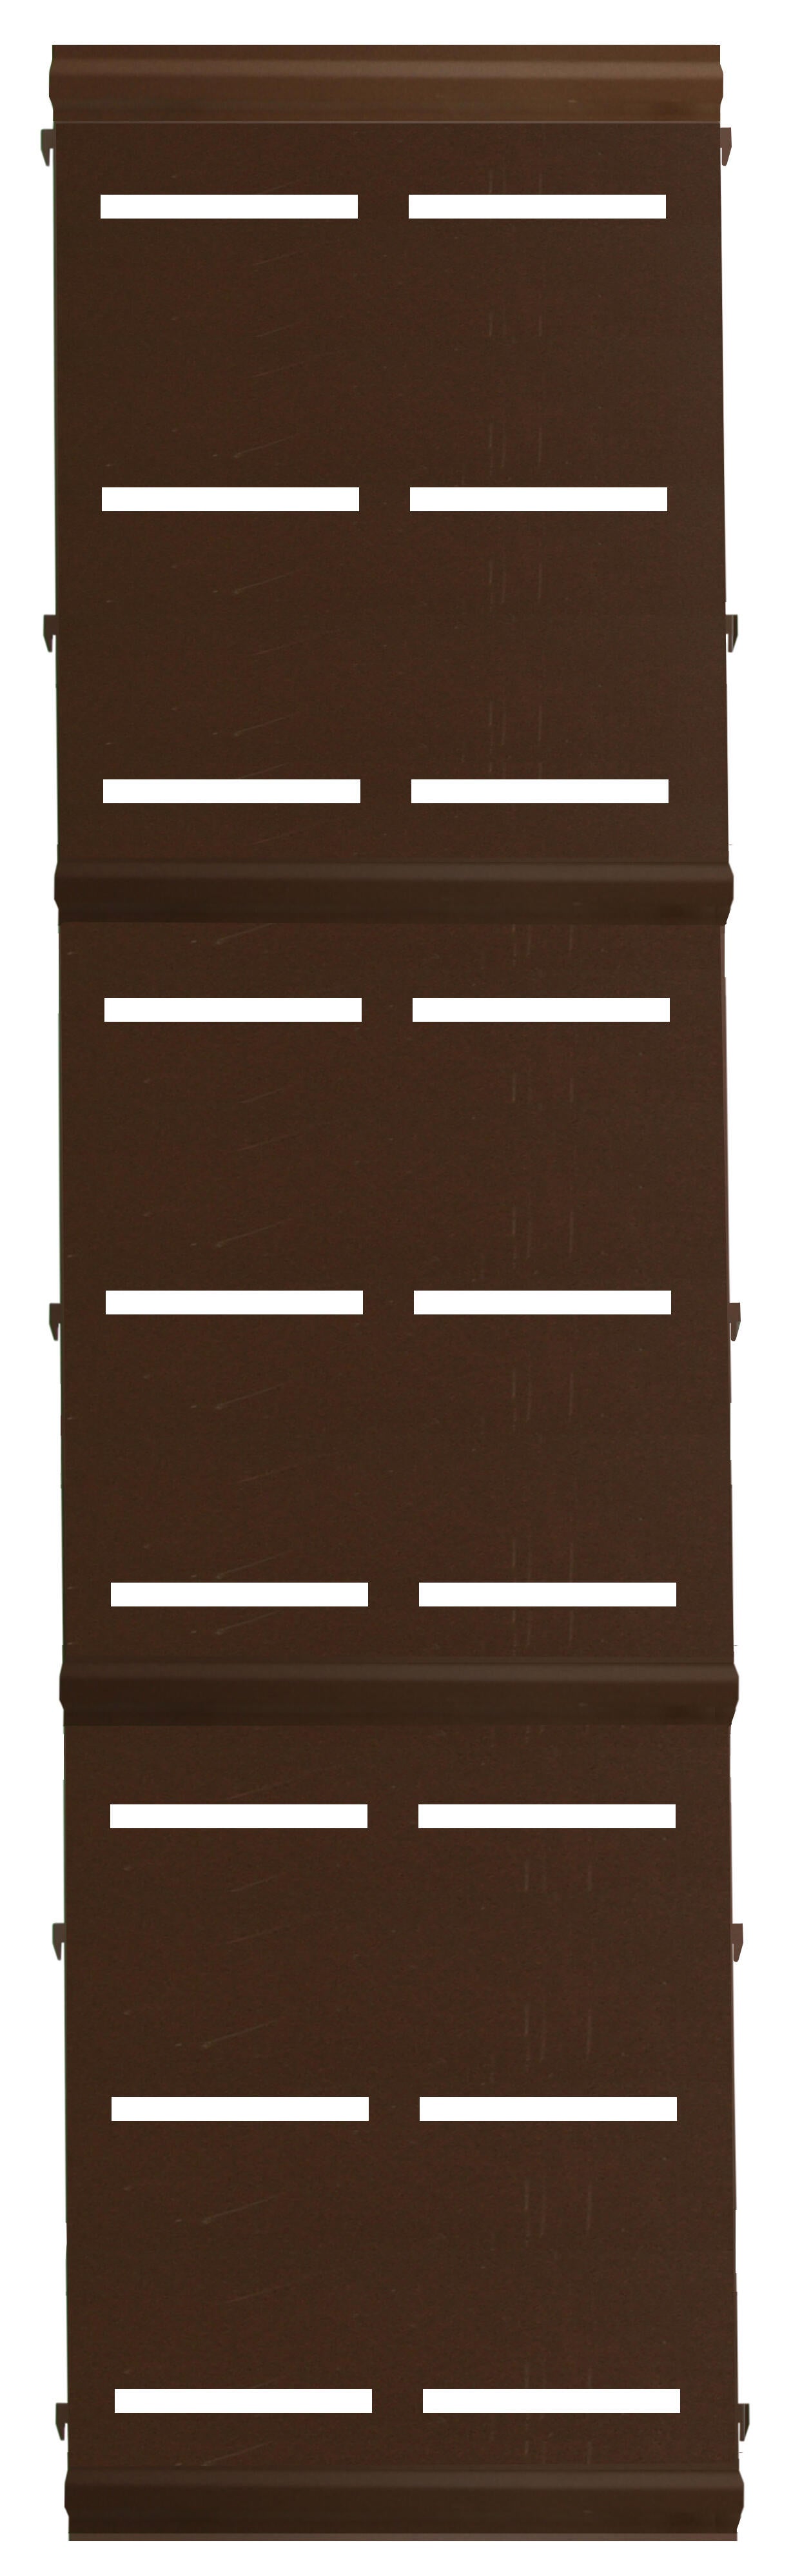 Panel remate valla acero galvanizado franja rayas marrón forja 194x52,5 cm